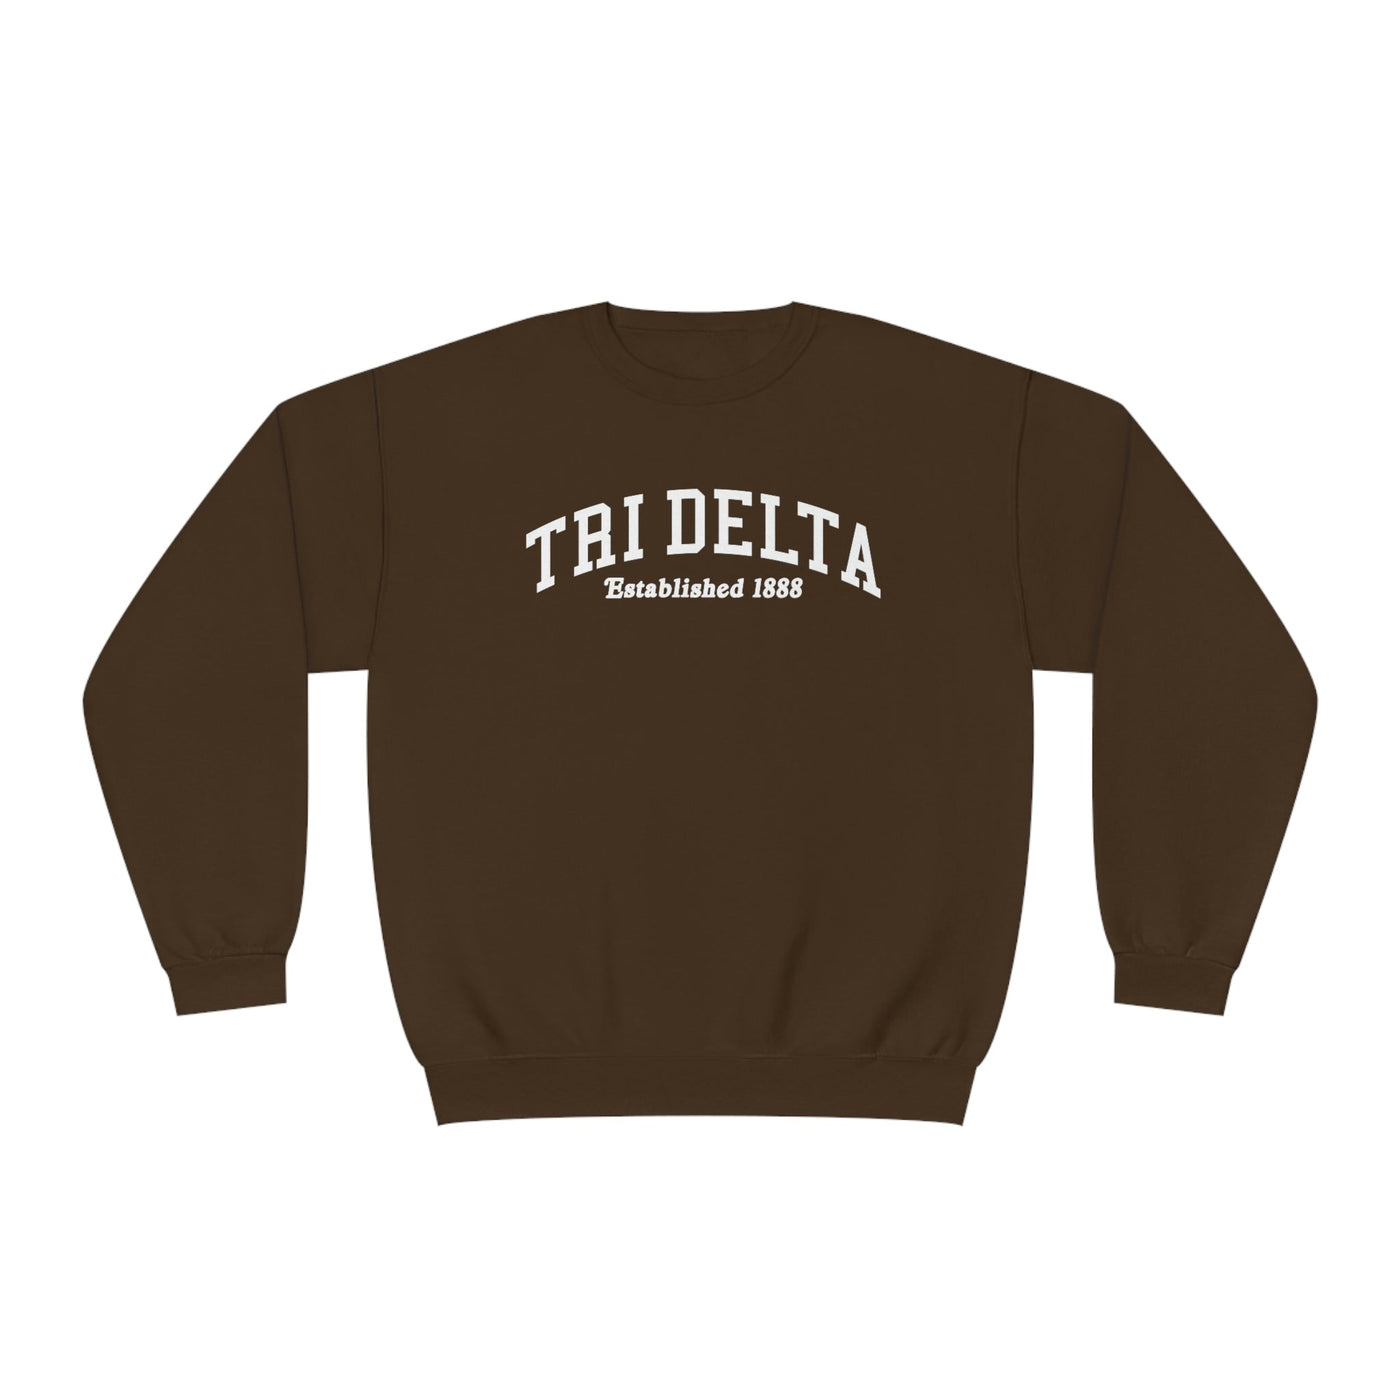 Delta Delta Delta Sorority Varsity College Tri Delta Crewneck Sweatshirt